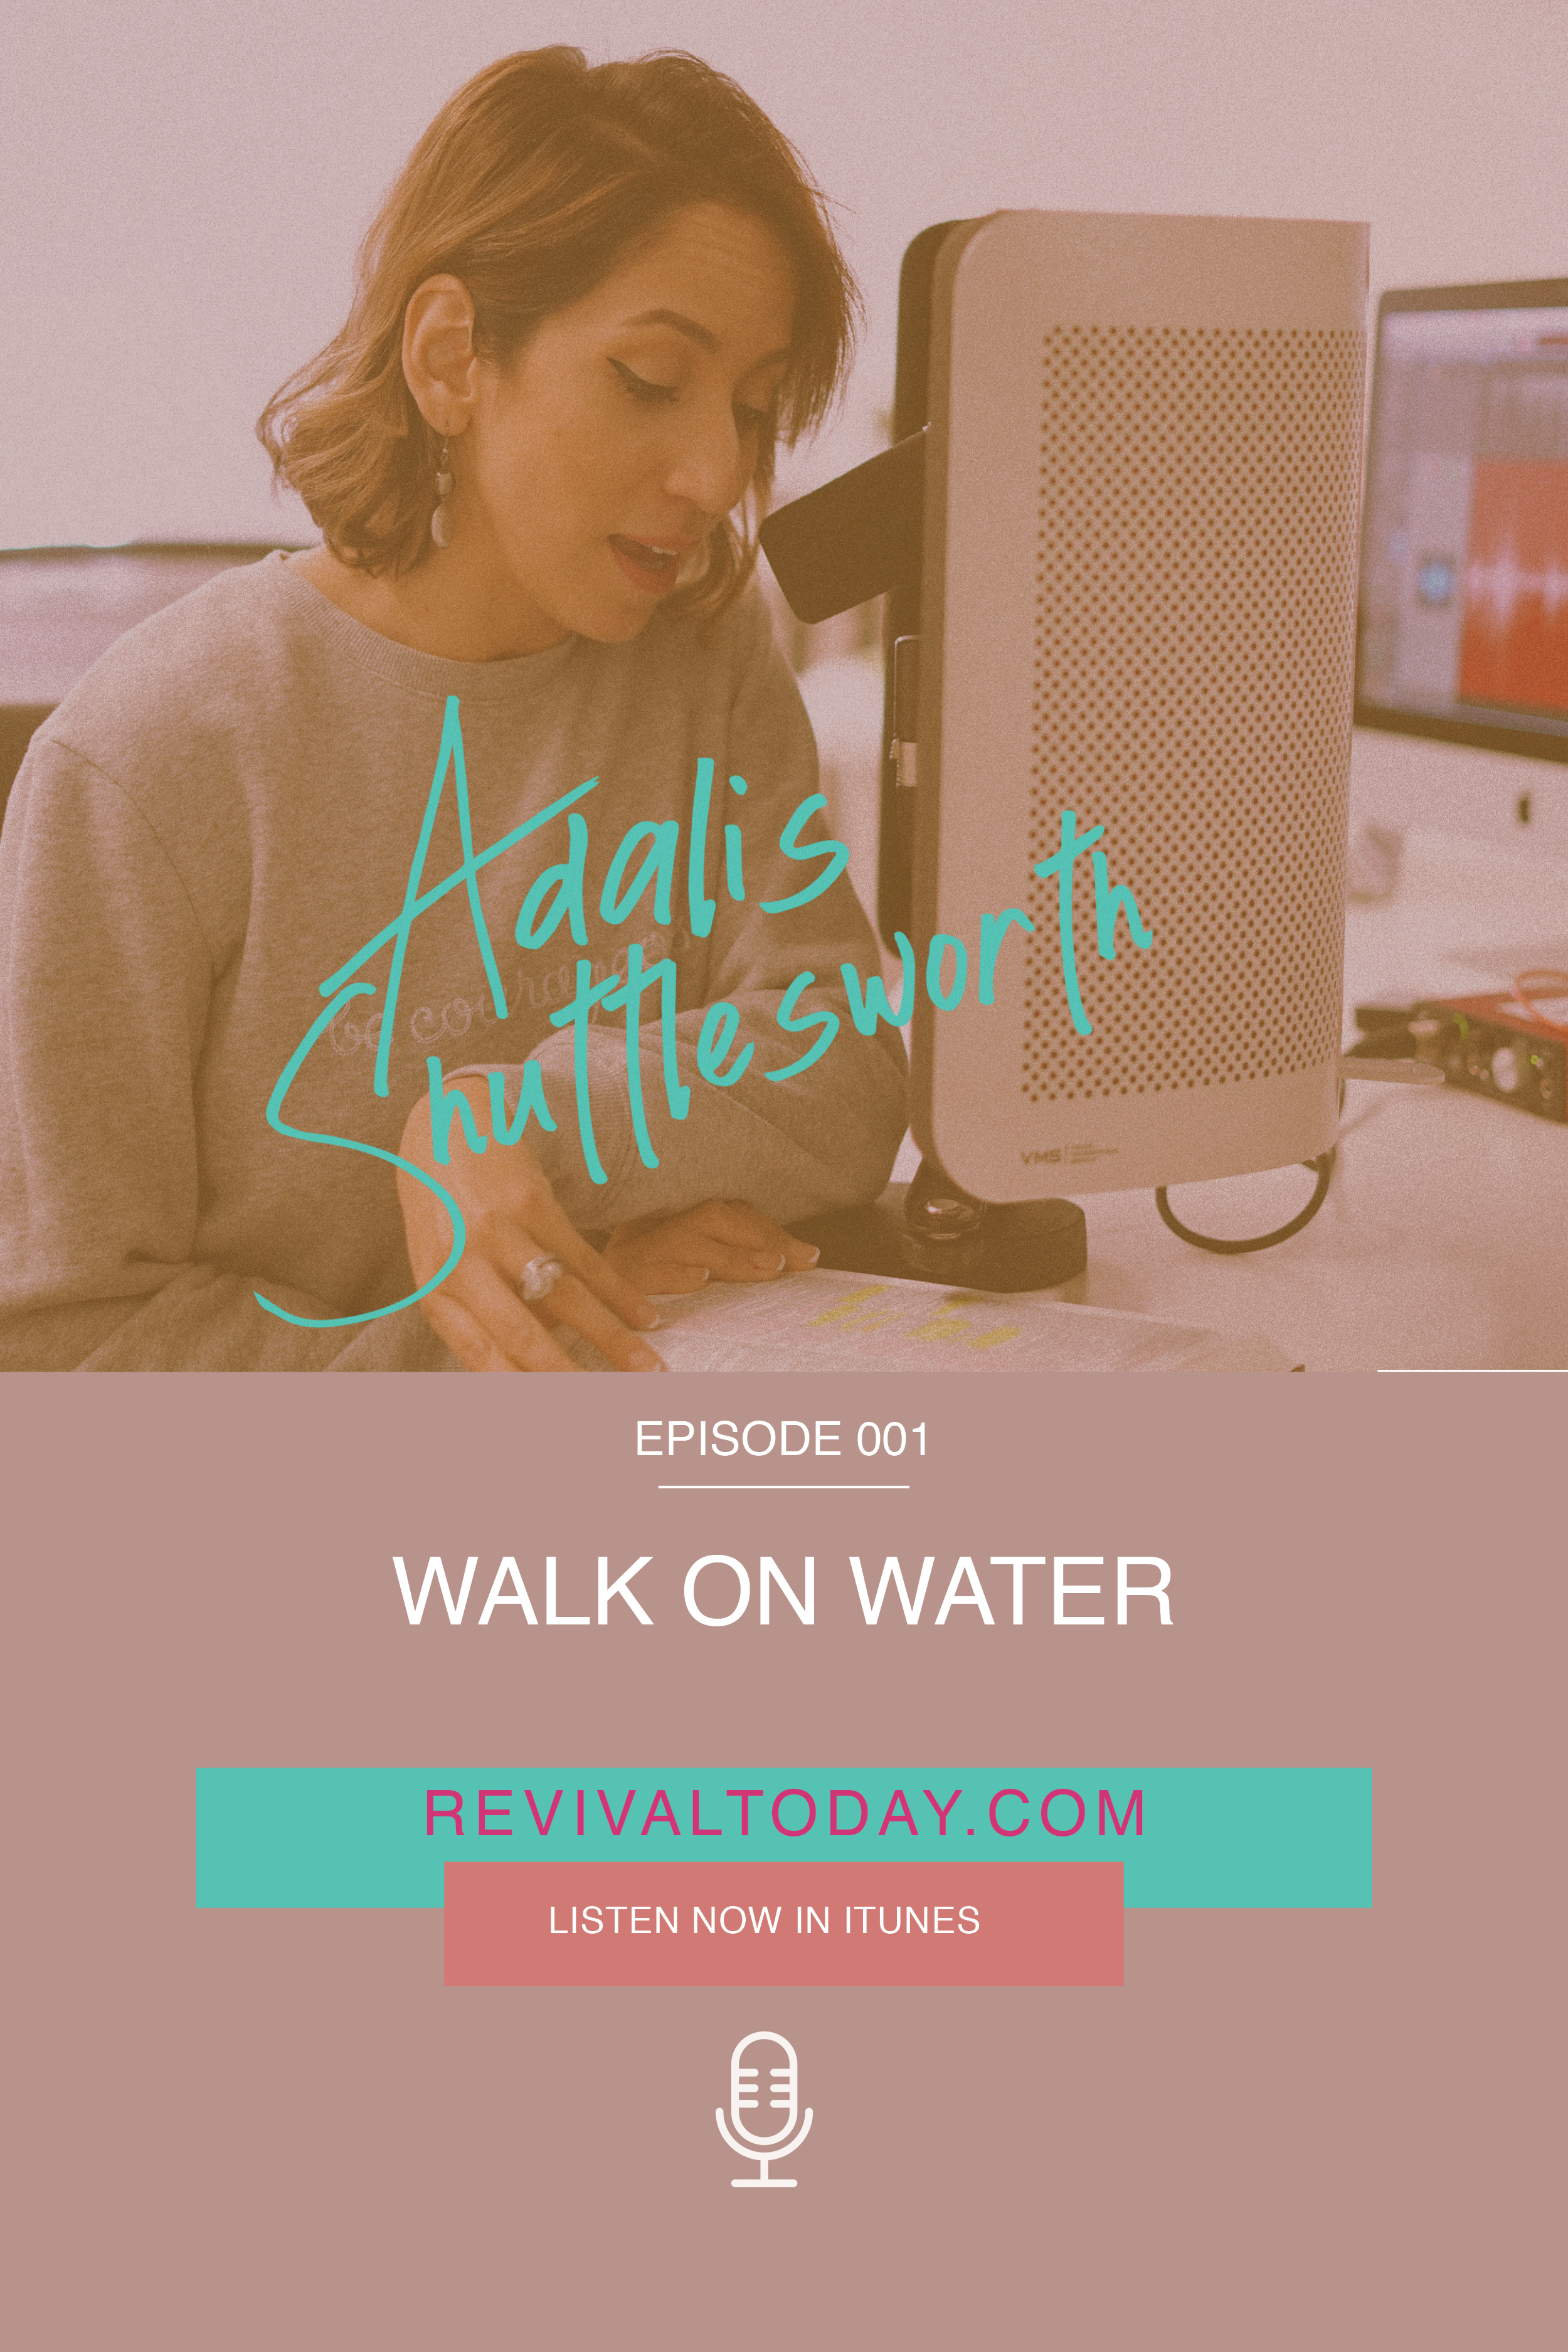 Adalis Shuttlesworth Podcast, Walk on Water